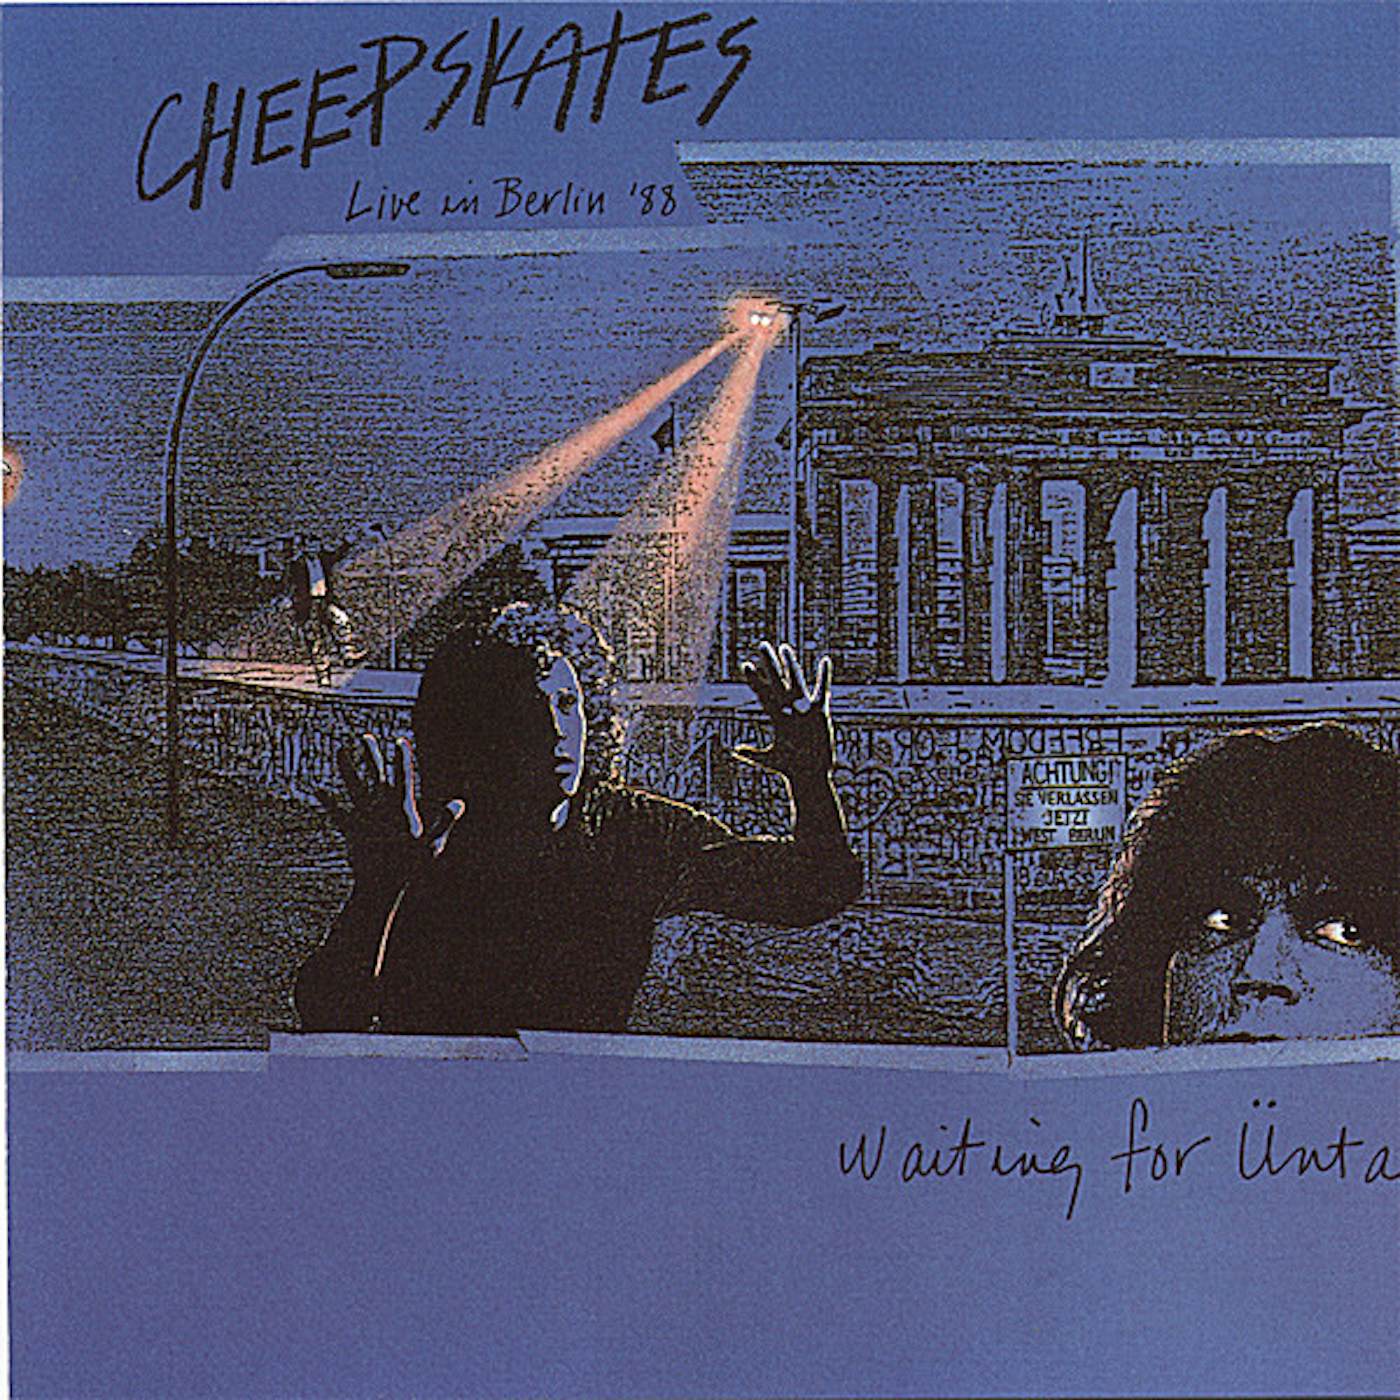 Cheepskates WAITING FOR UNTA-LIVE IN BERLIN '88 CD